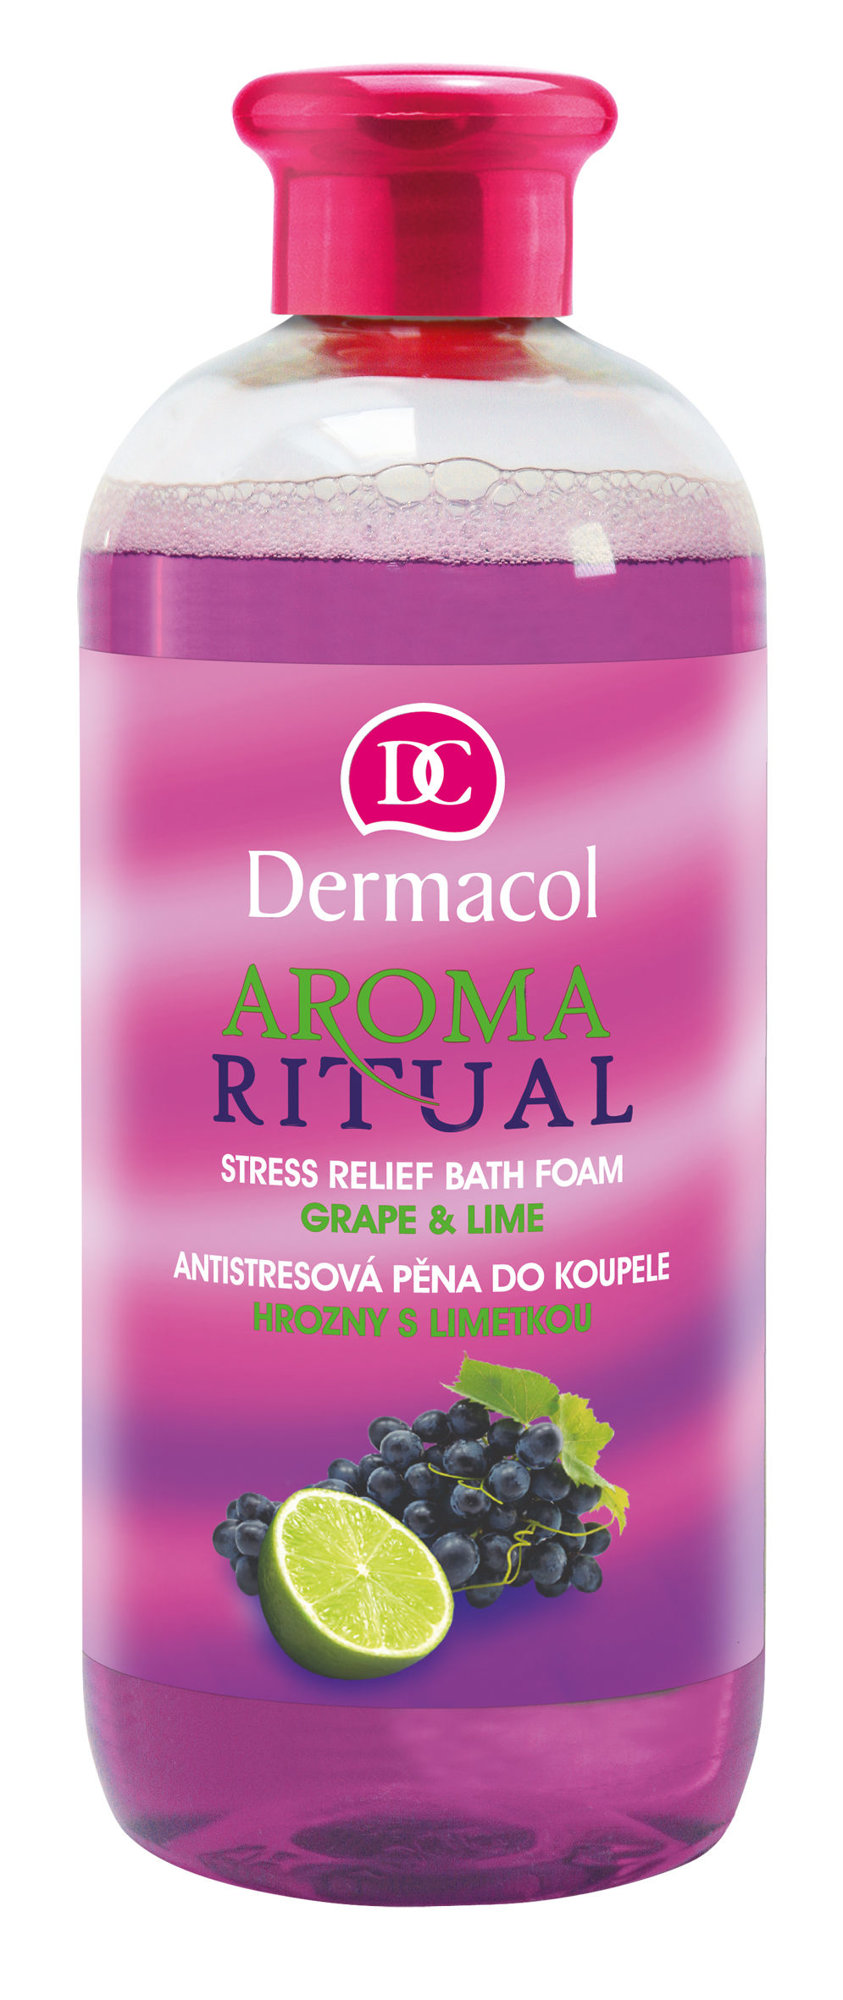 Dermacol Aroma Ritual Grape & Lime 500ml vonios putos